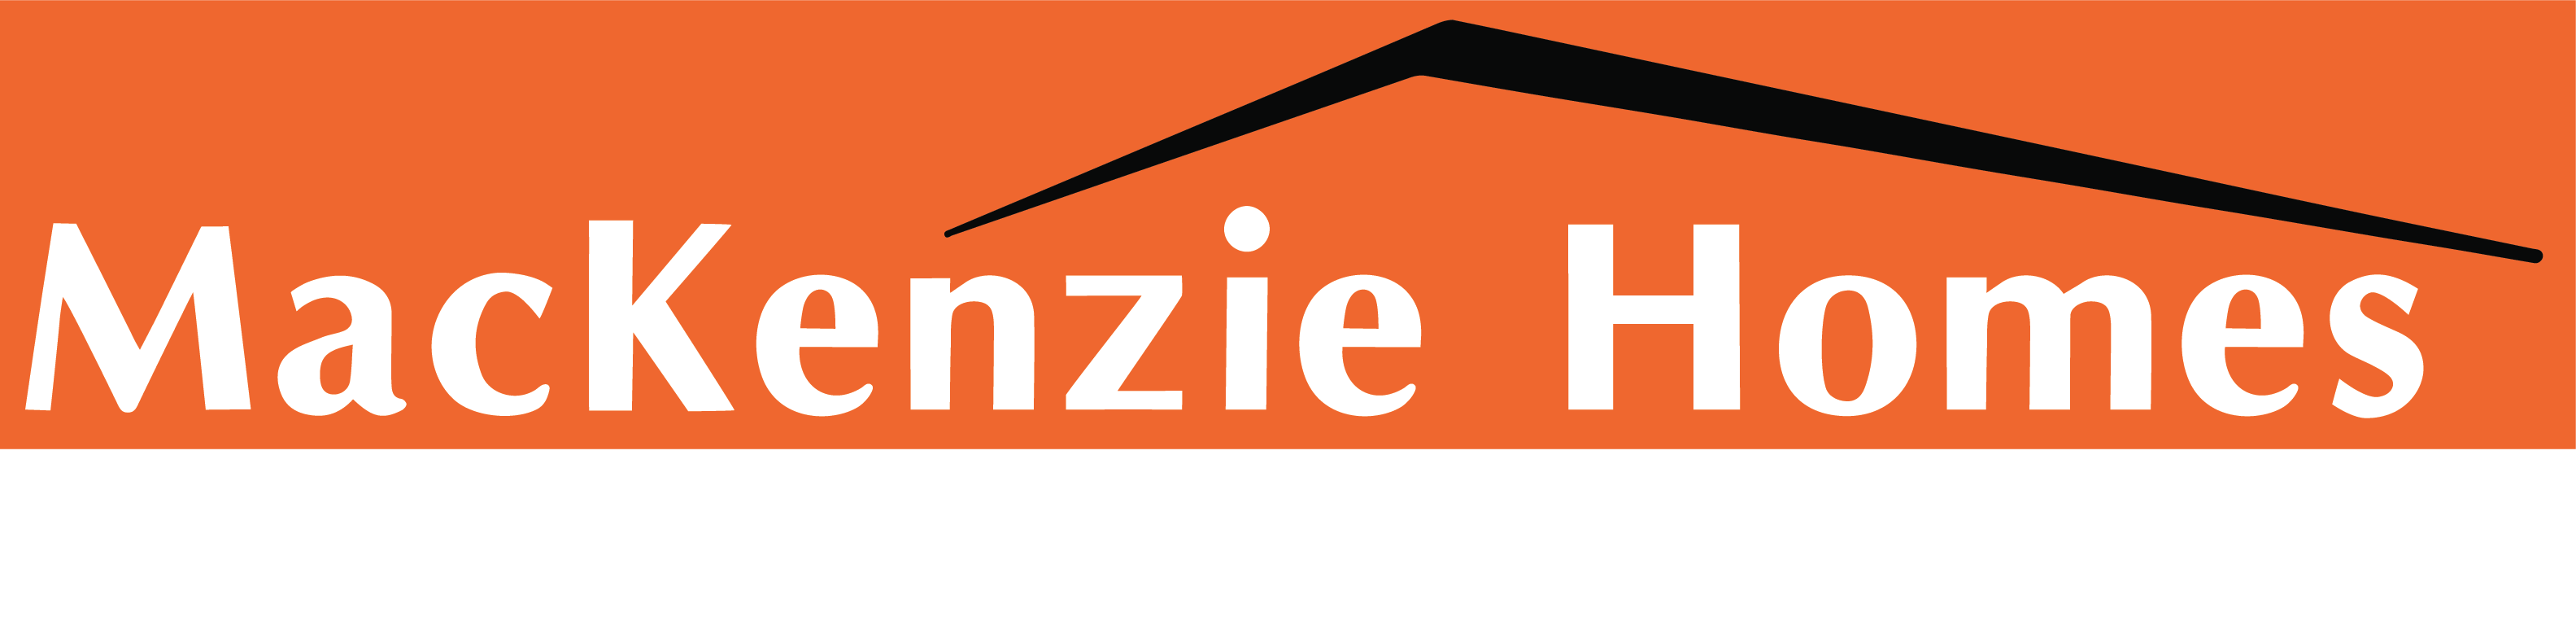 Mackenzie Homes & Commercial